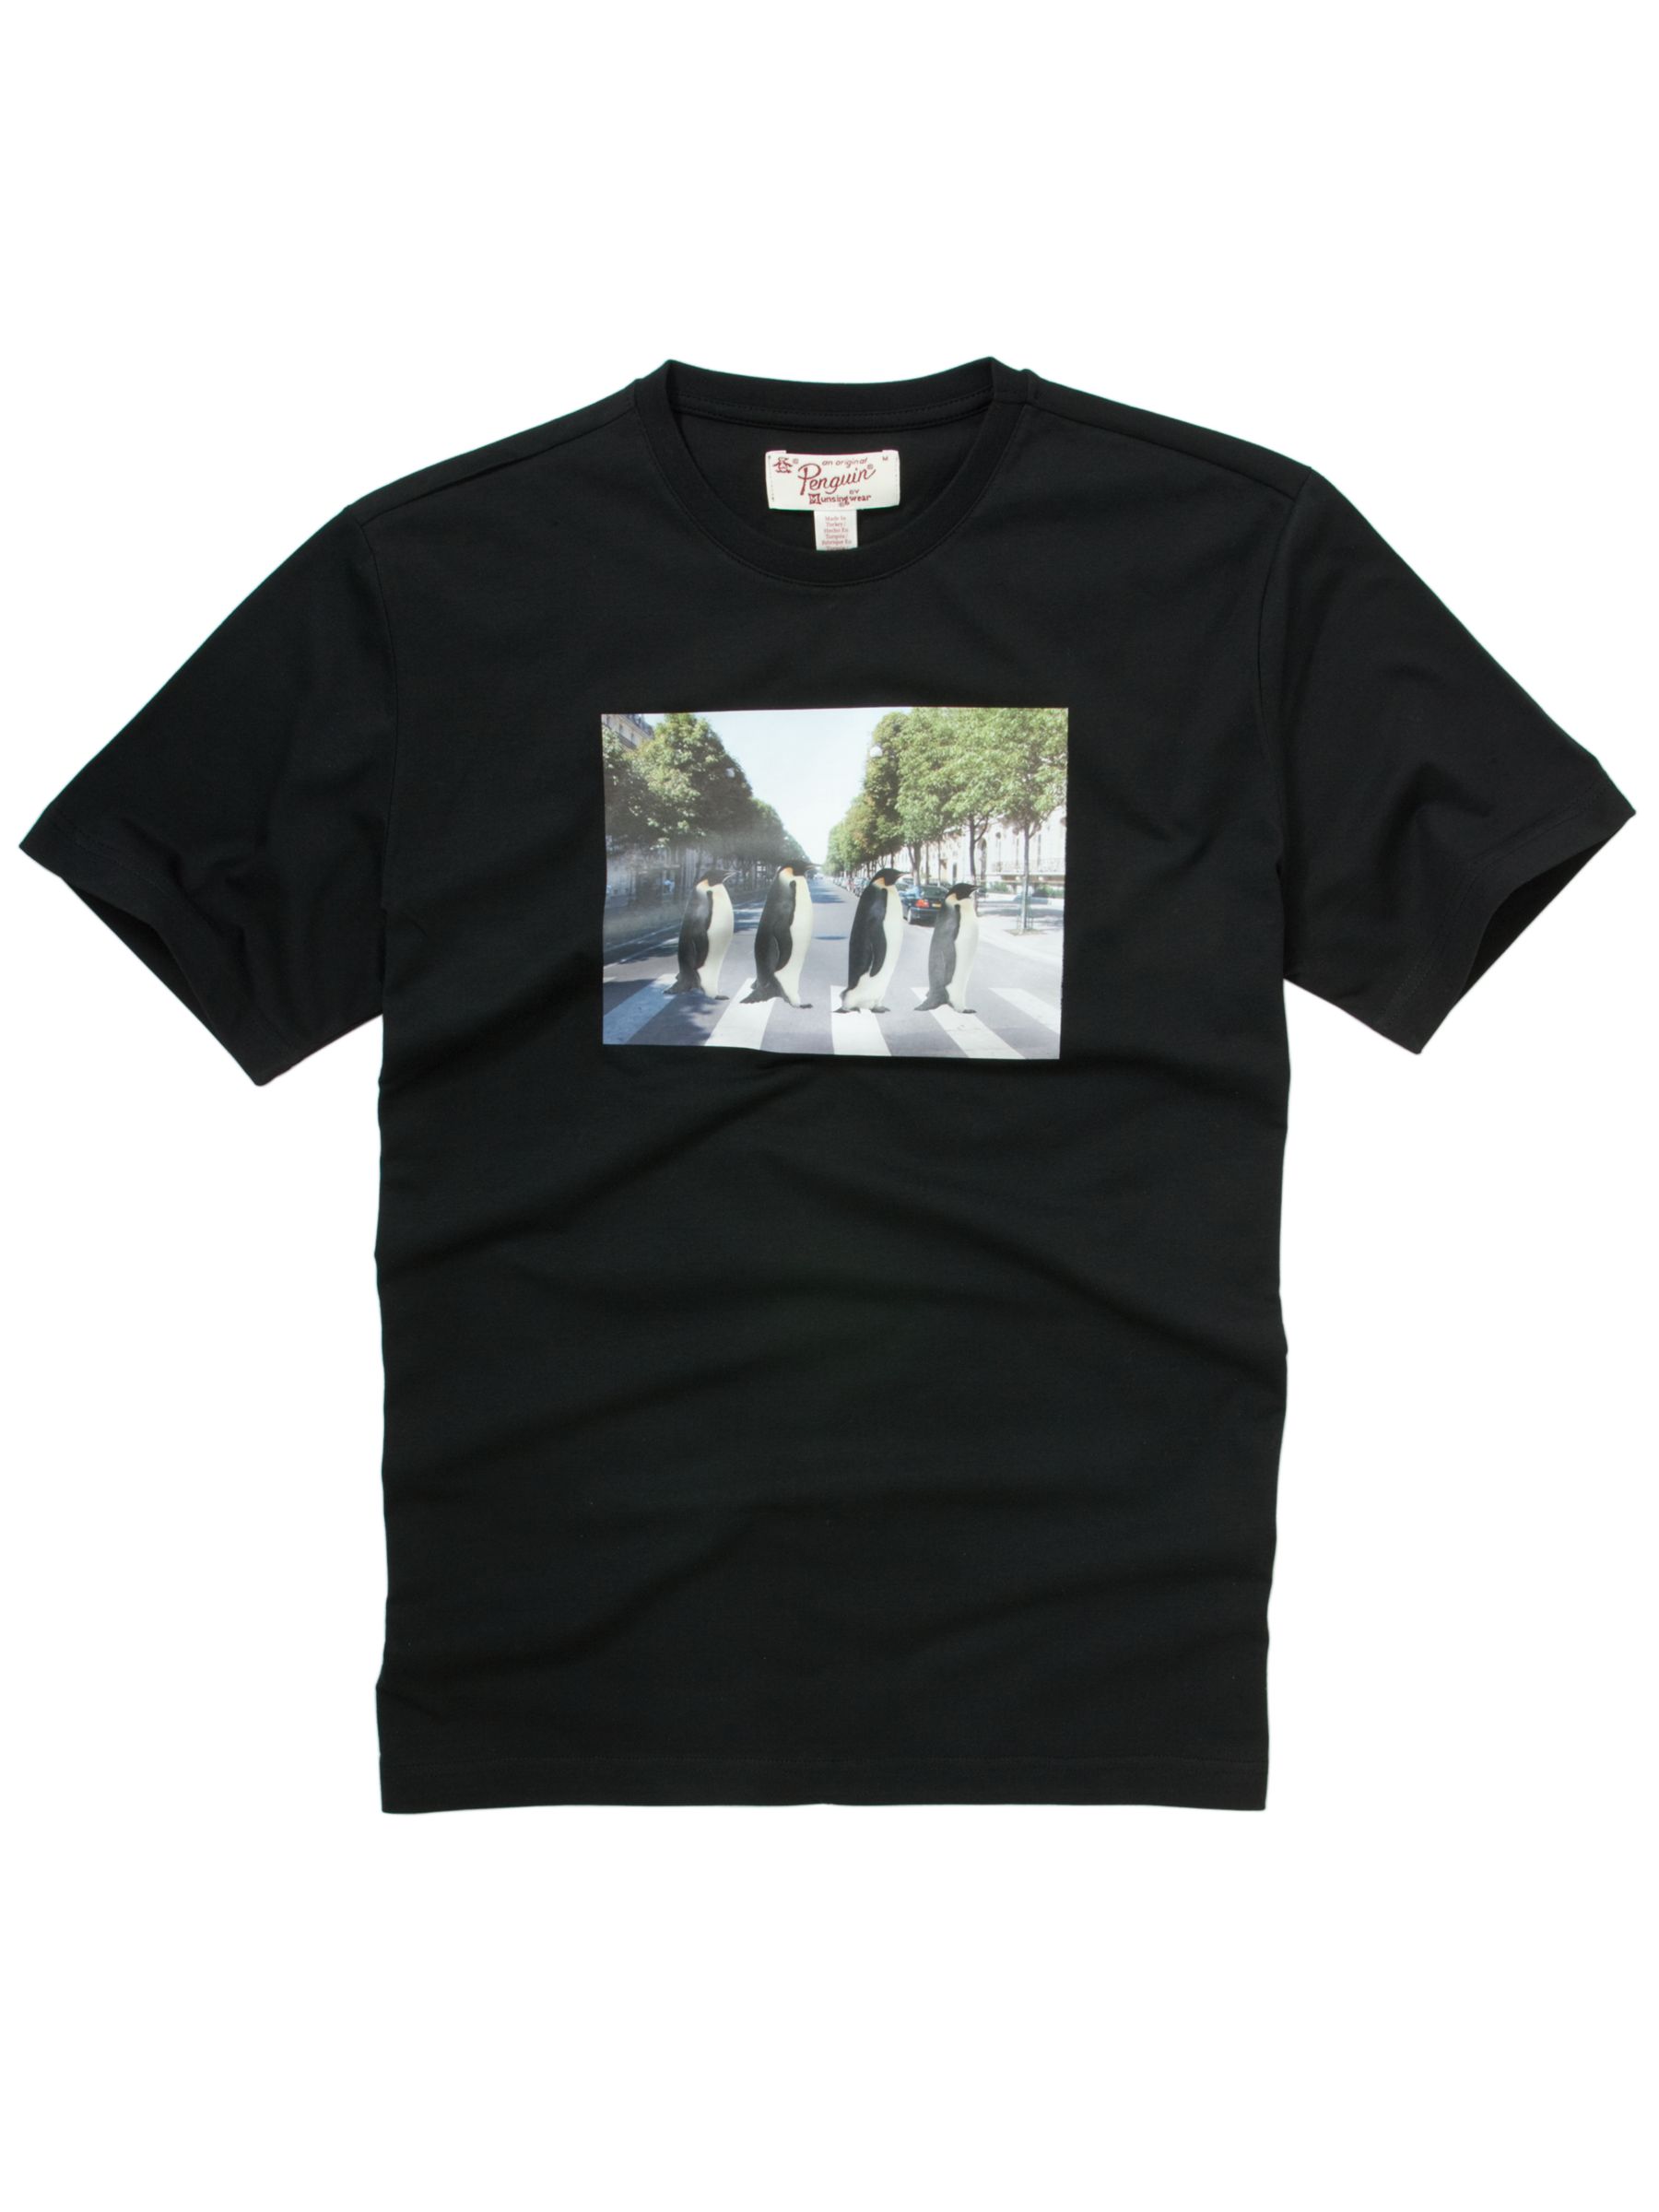 Abbey Road Penguin T-Shirt, Black